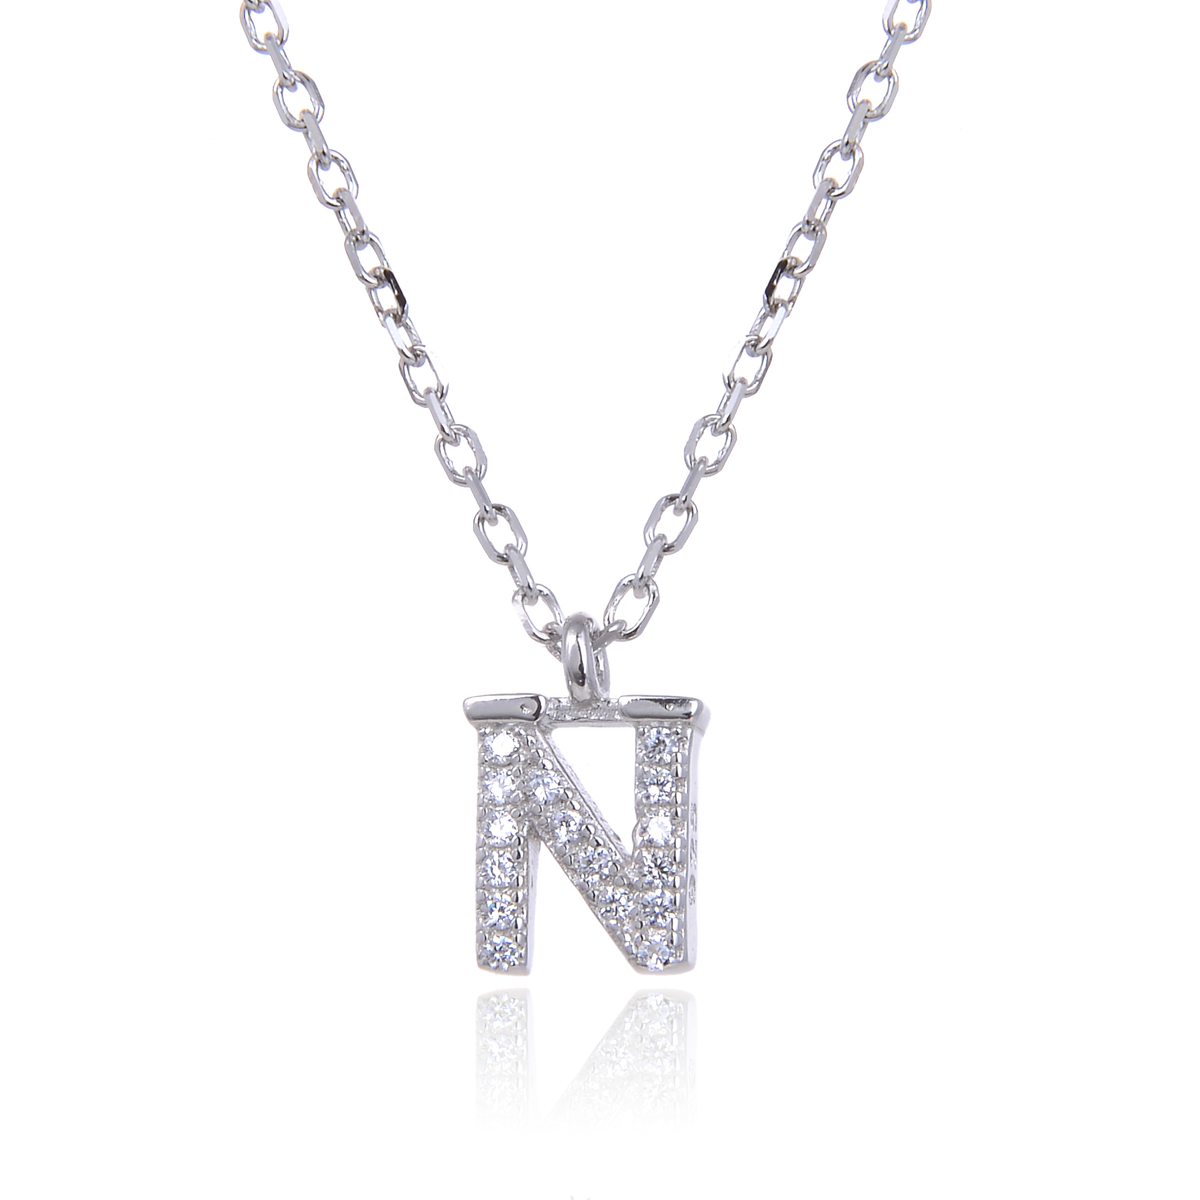 Letter N Necklace - penelope-it.com